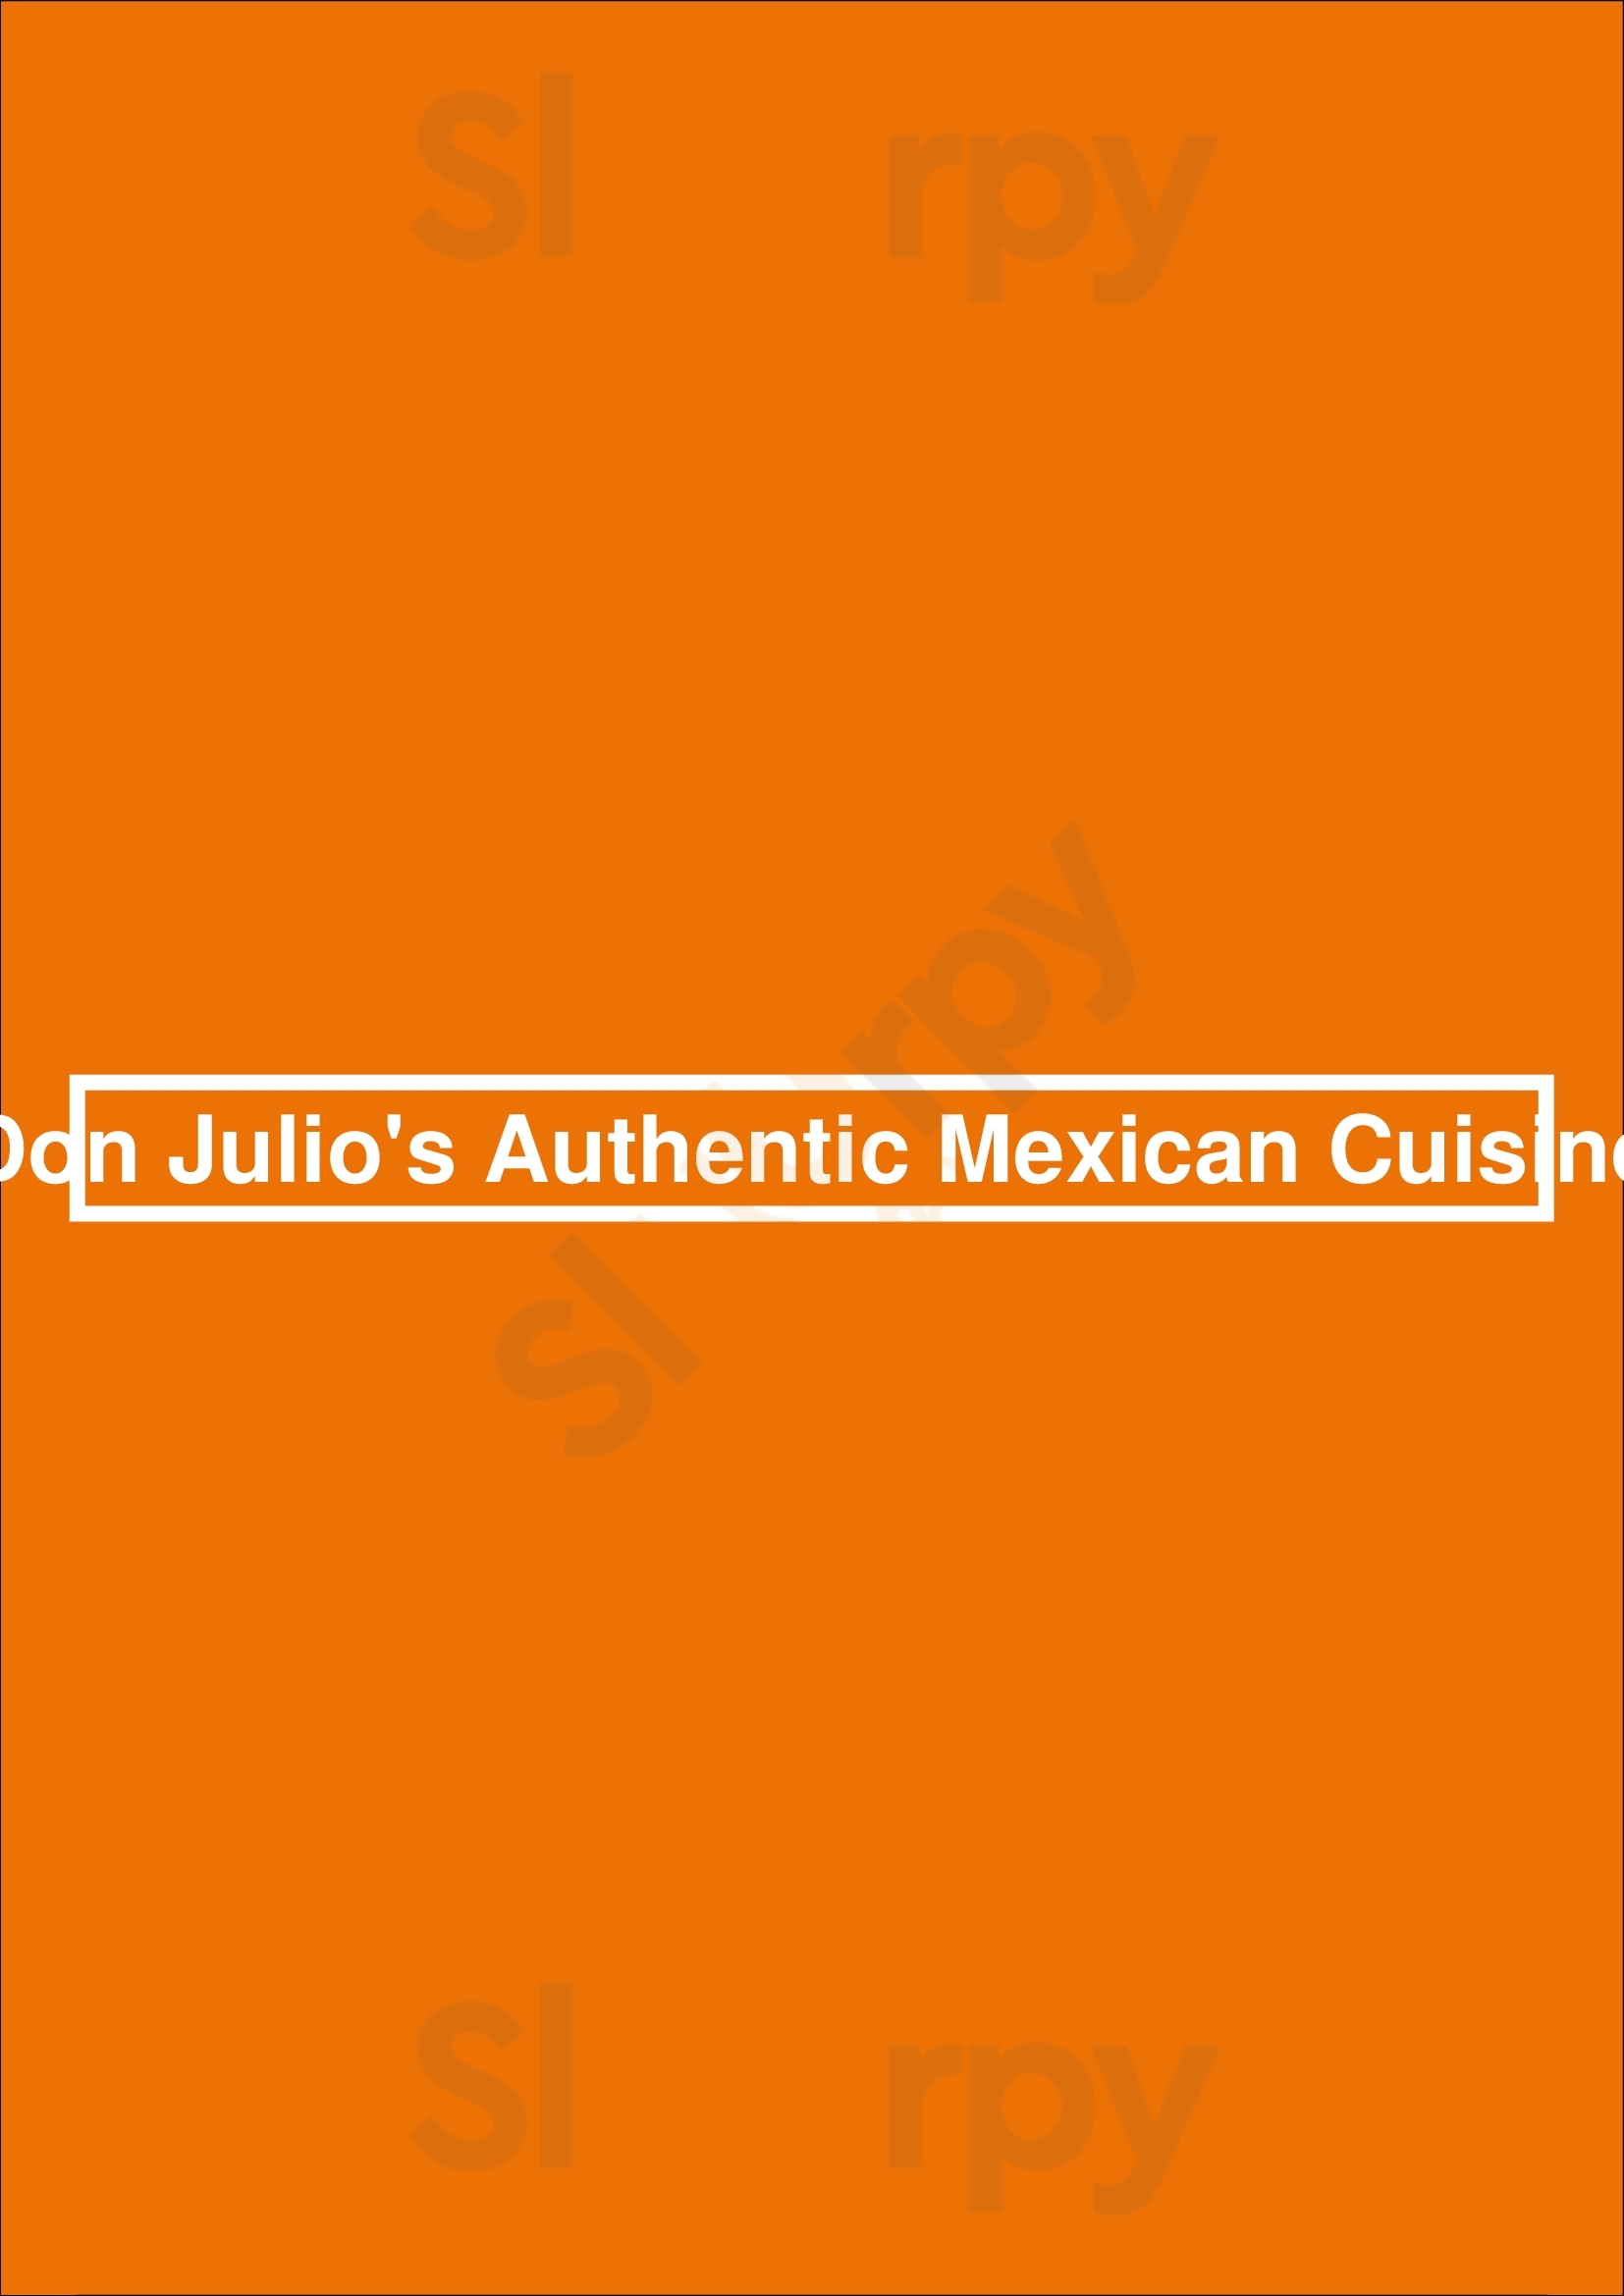 Don Julio's Authentic Mexican Cuisine Tampa Menu - 1